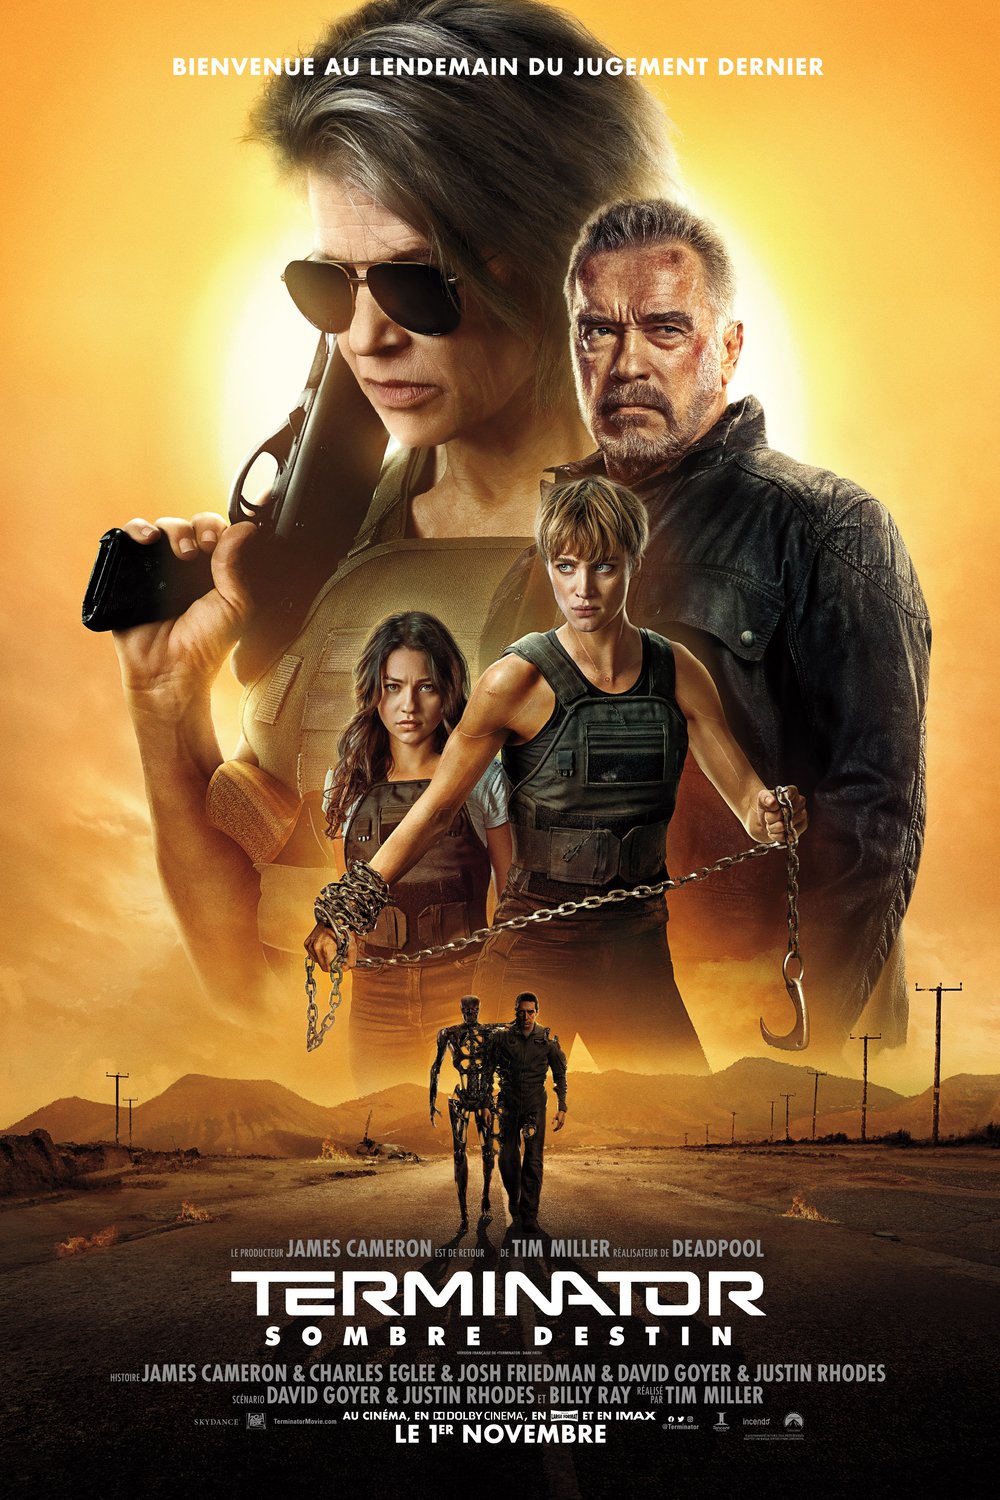 Poster of the movie Terminator: Sombre destin